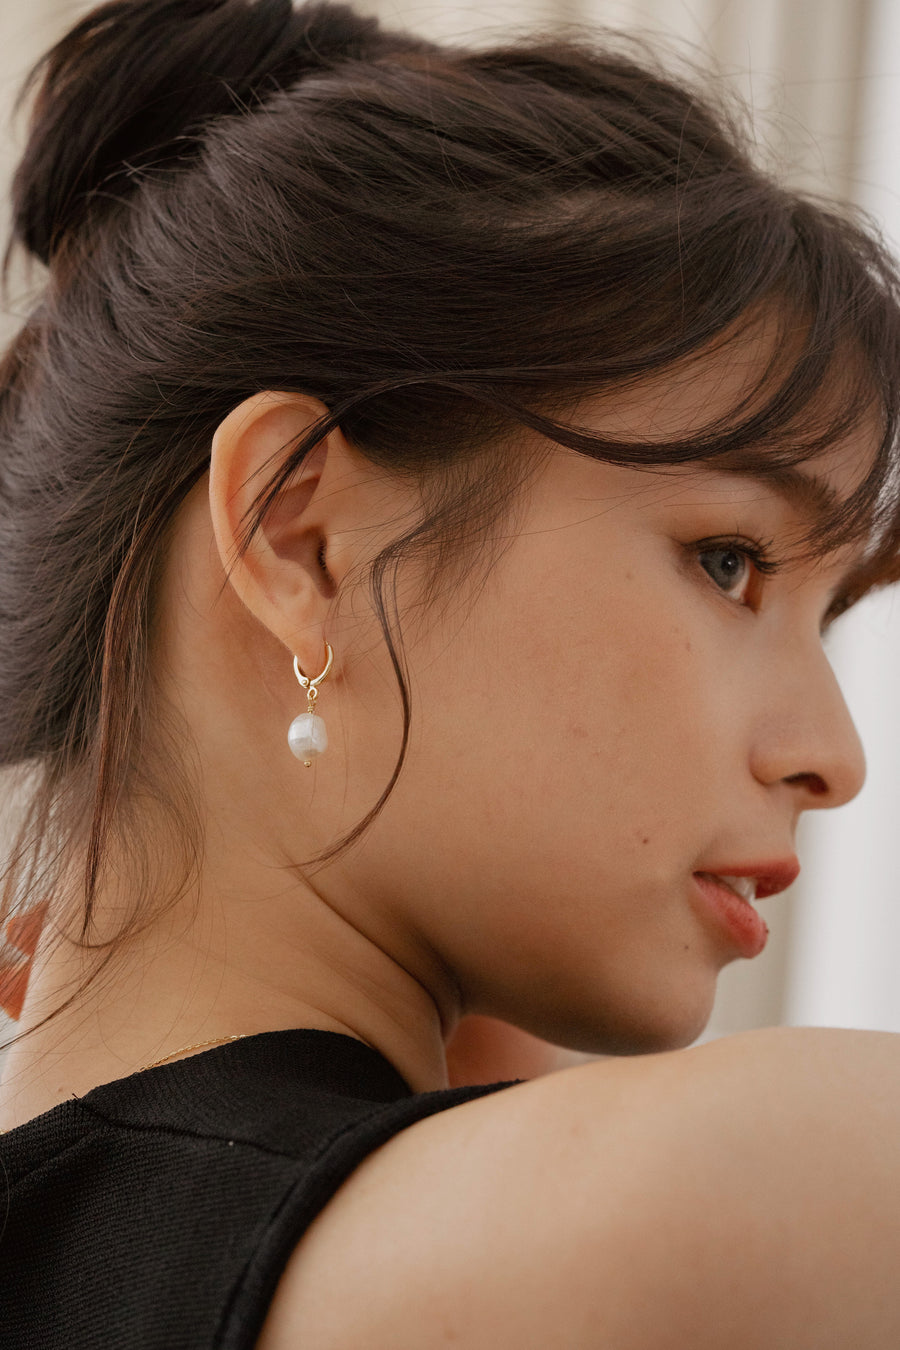 Ovate Baroque Pearl Diamond Huggies Earrings